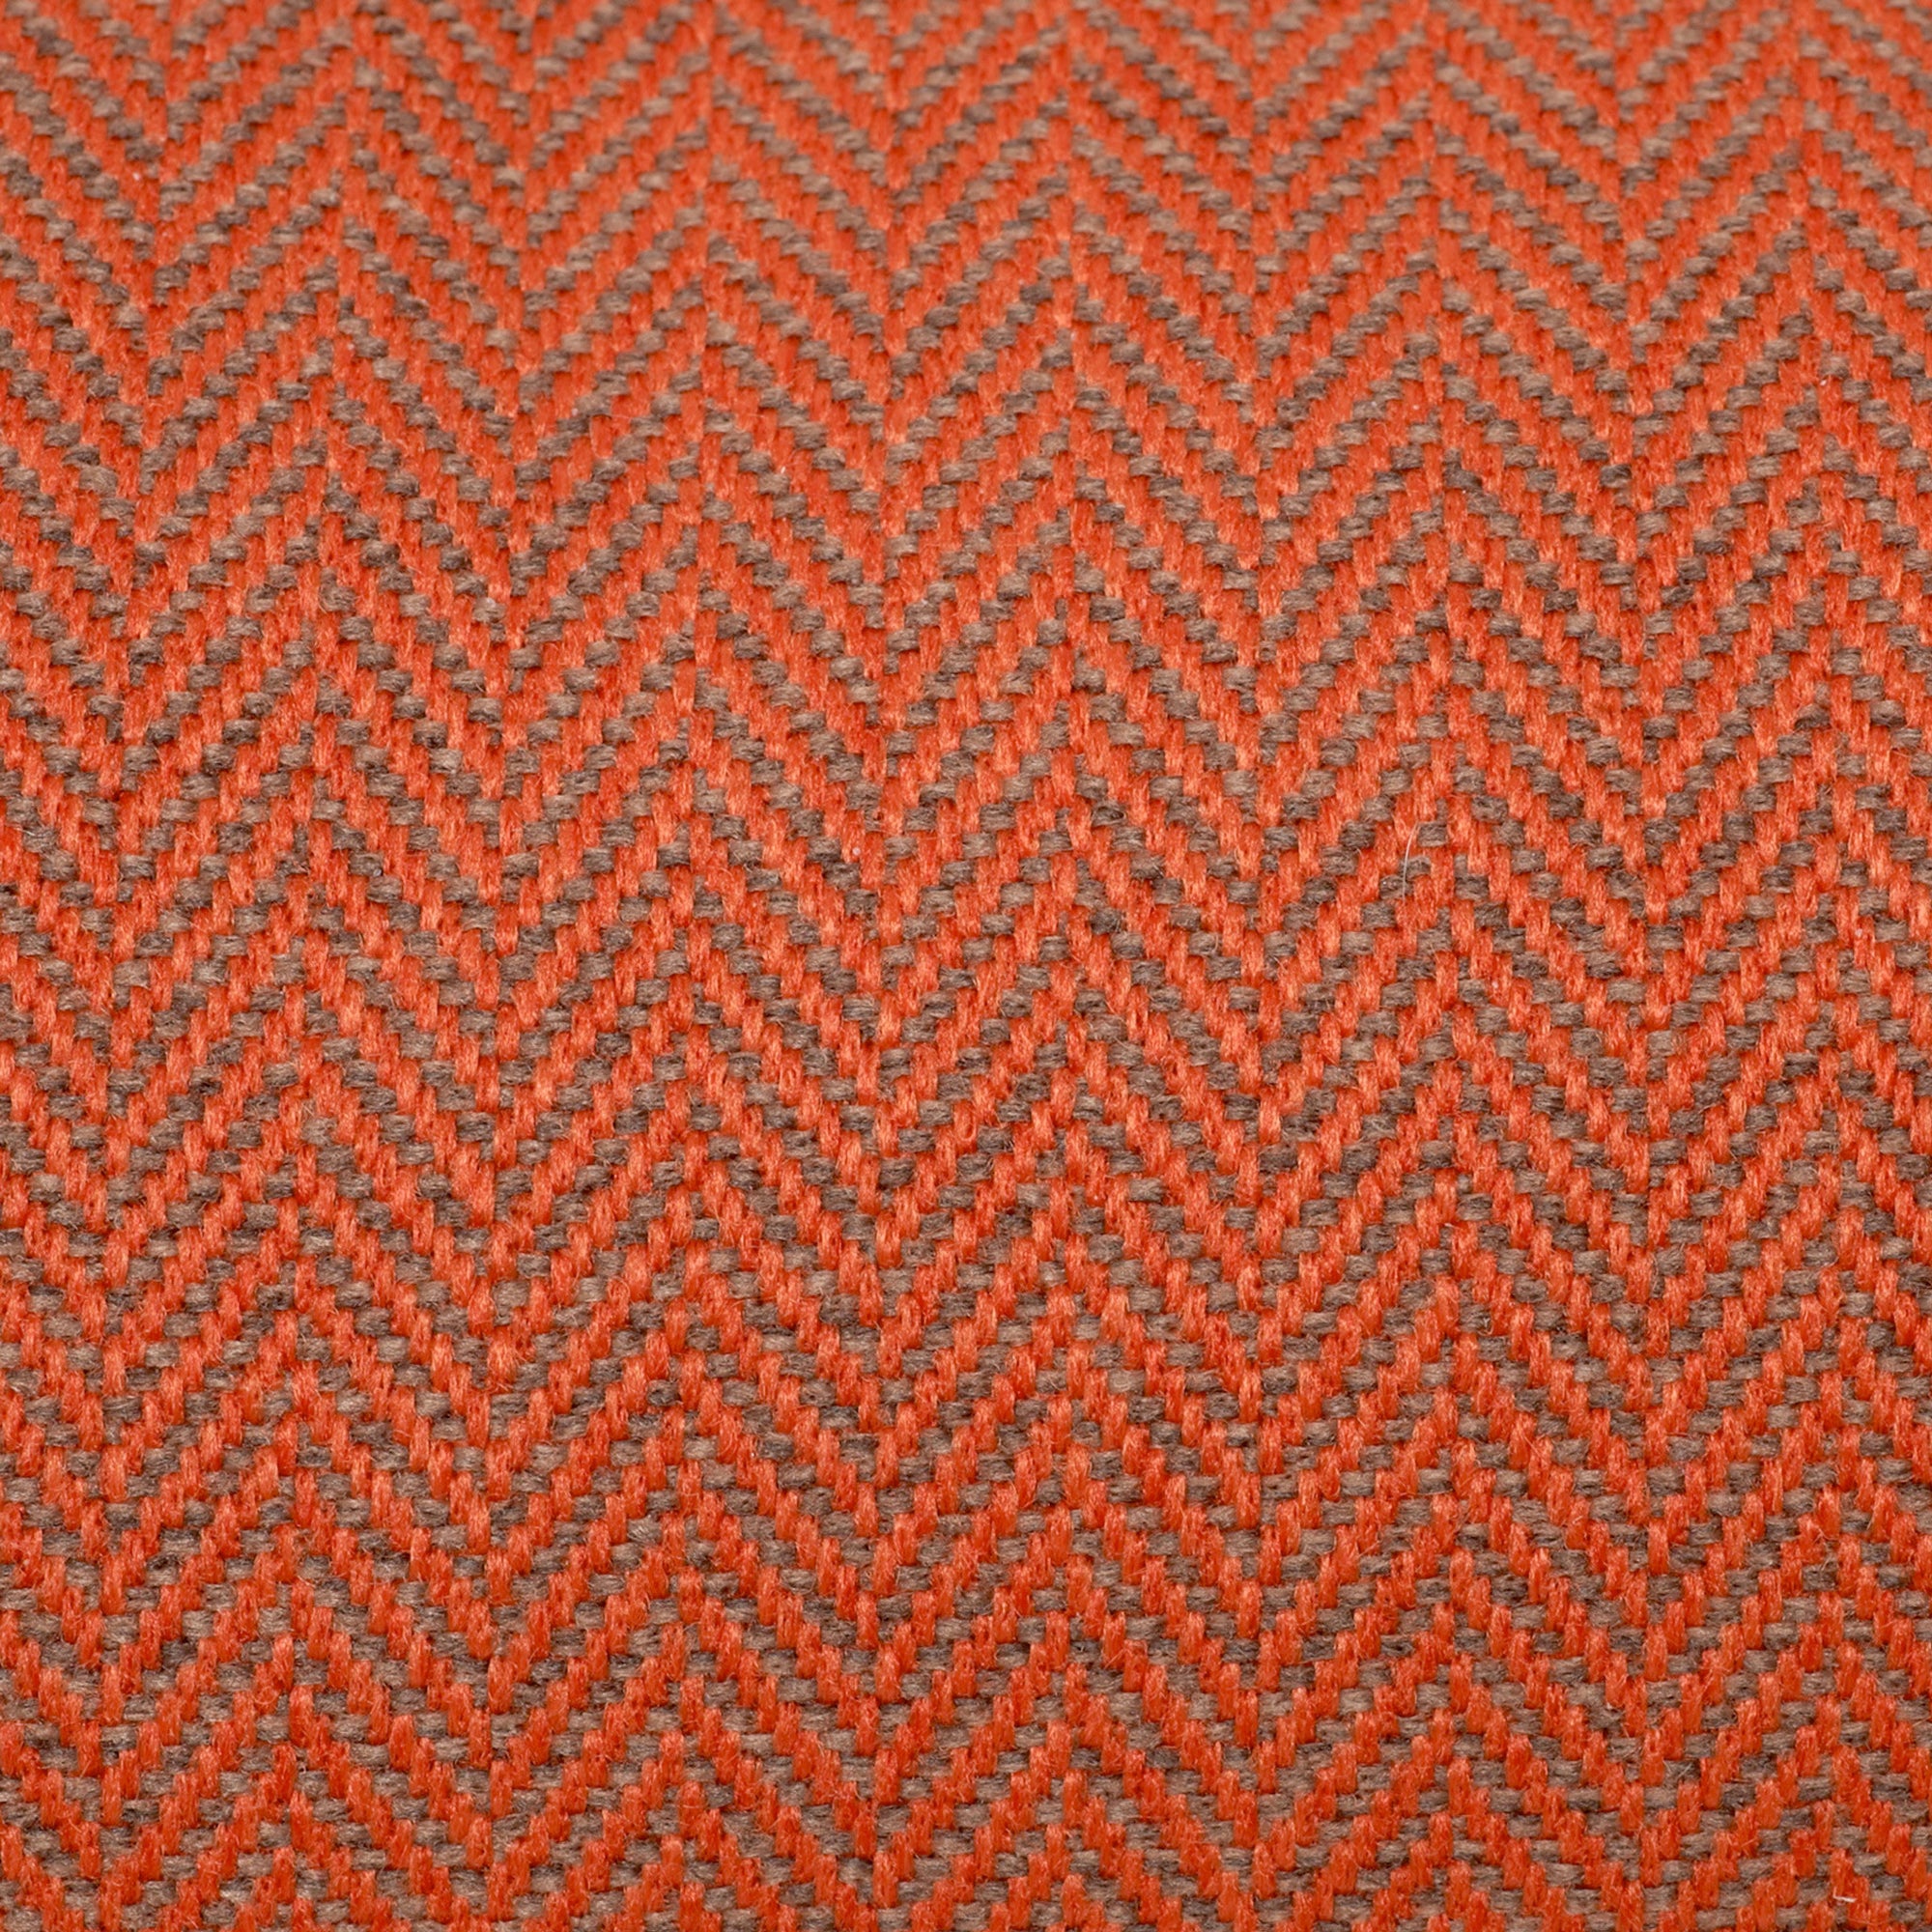 KONA CAVE® designer dog bed in elegant orange herringbone fabric - detail.